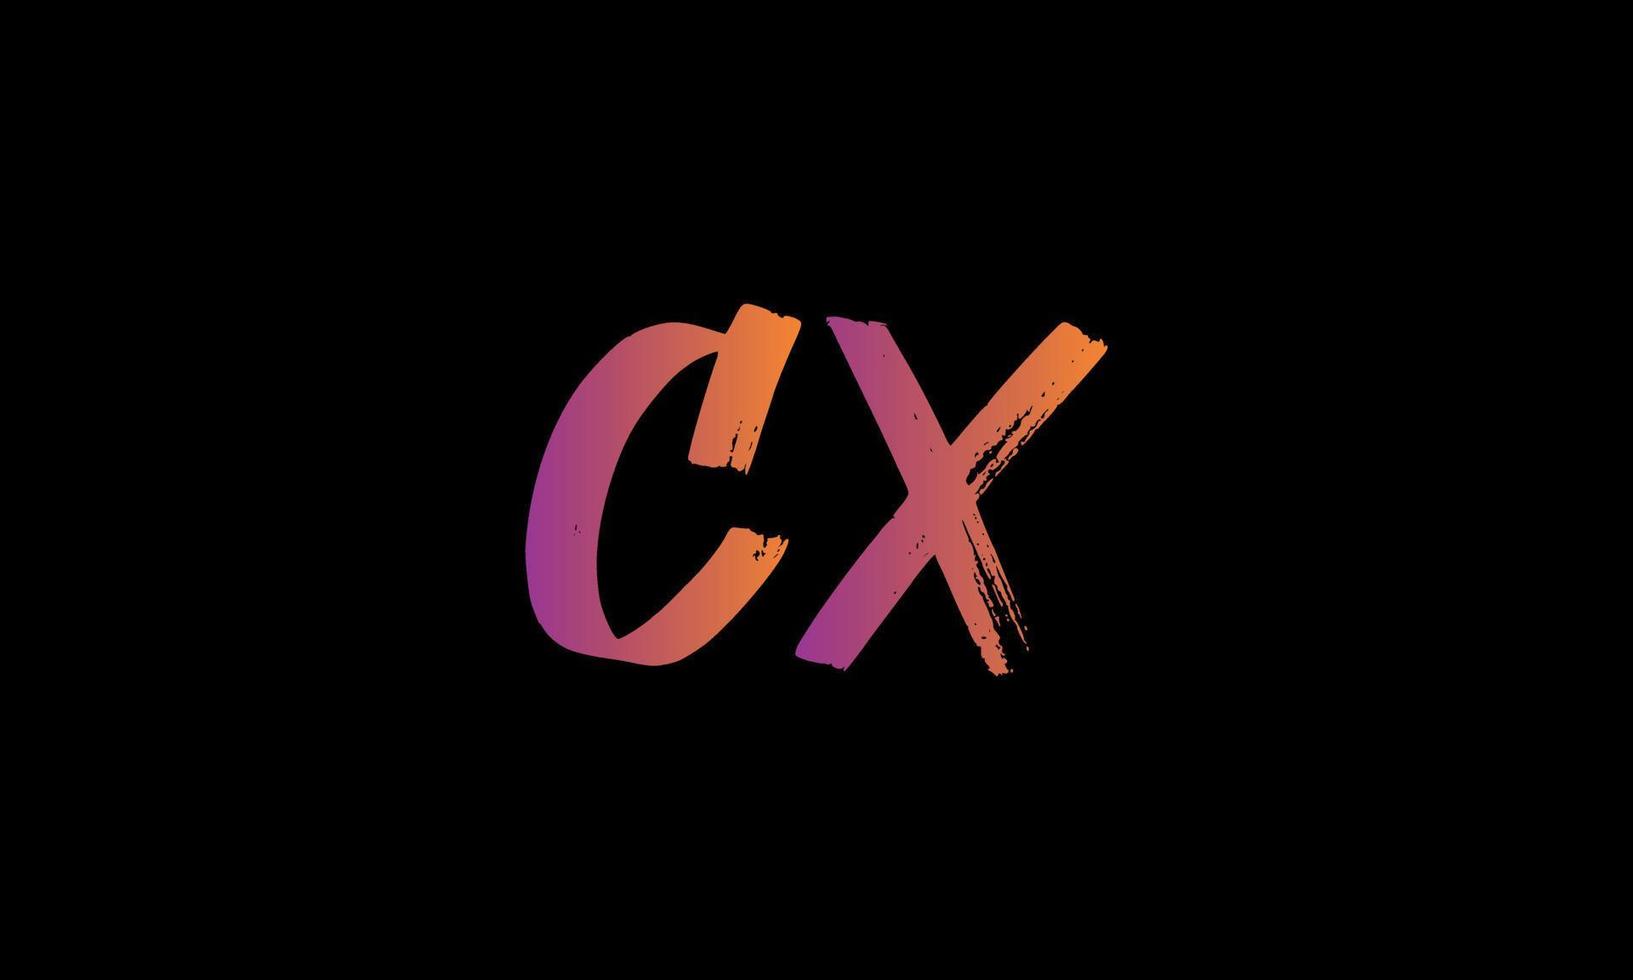 första brev cx logotyp. cx borsta stock brev logotyp design fri vektor mall.